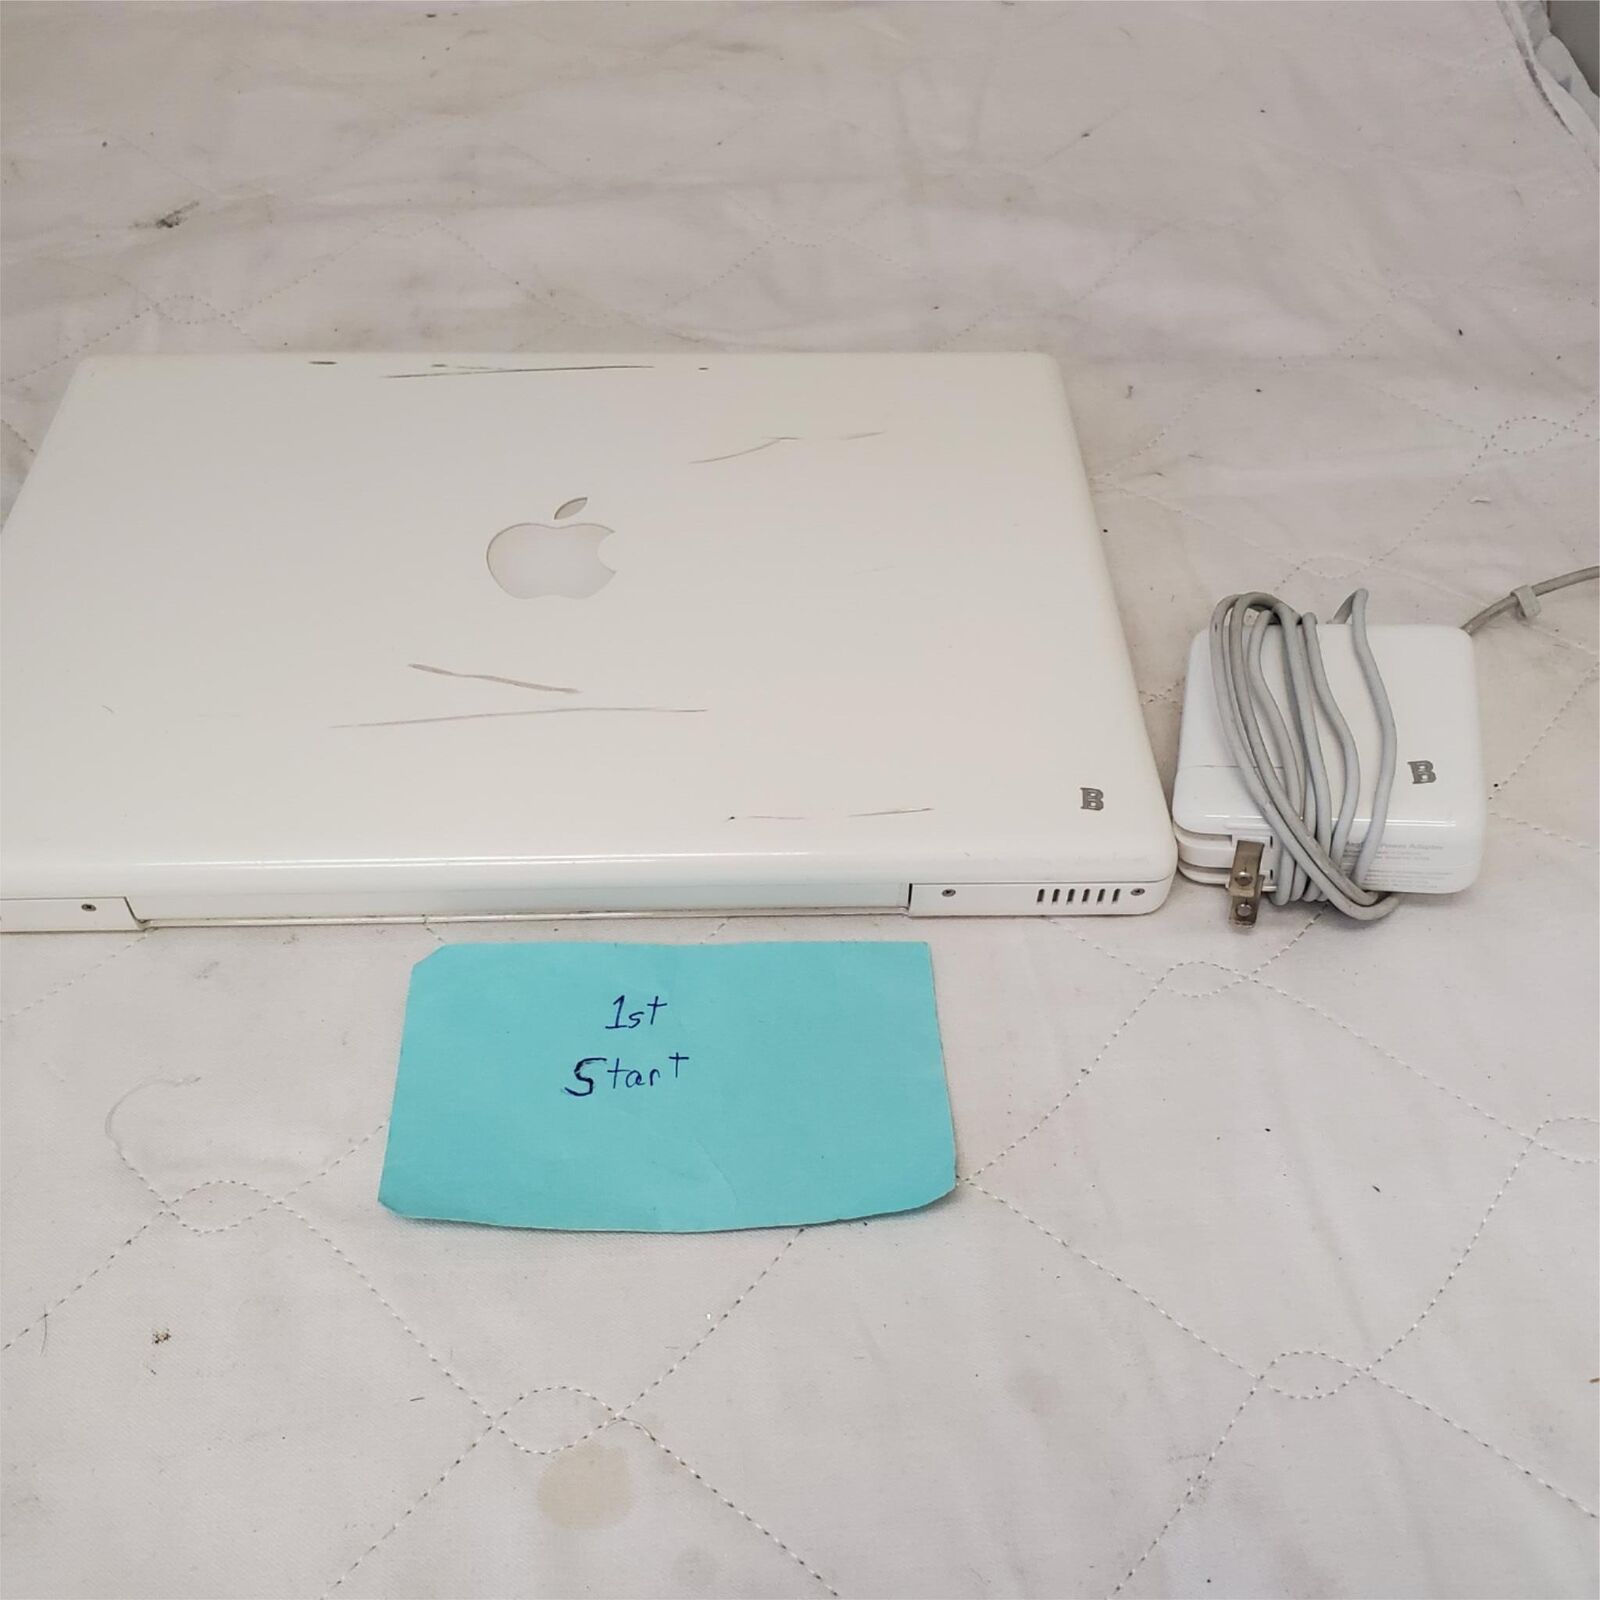 Vintage Apple Macbook Laptop Model A1181 White